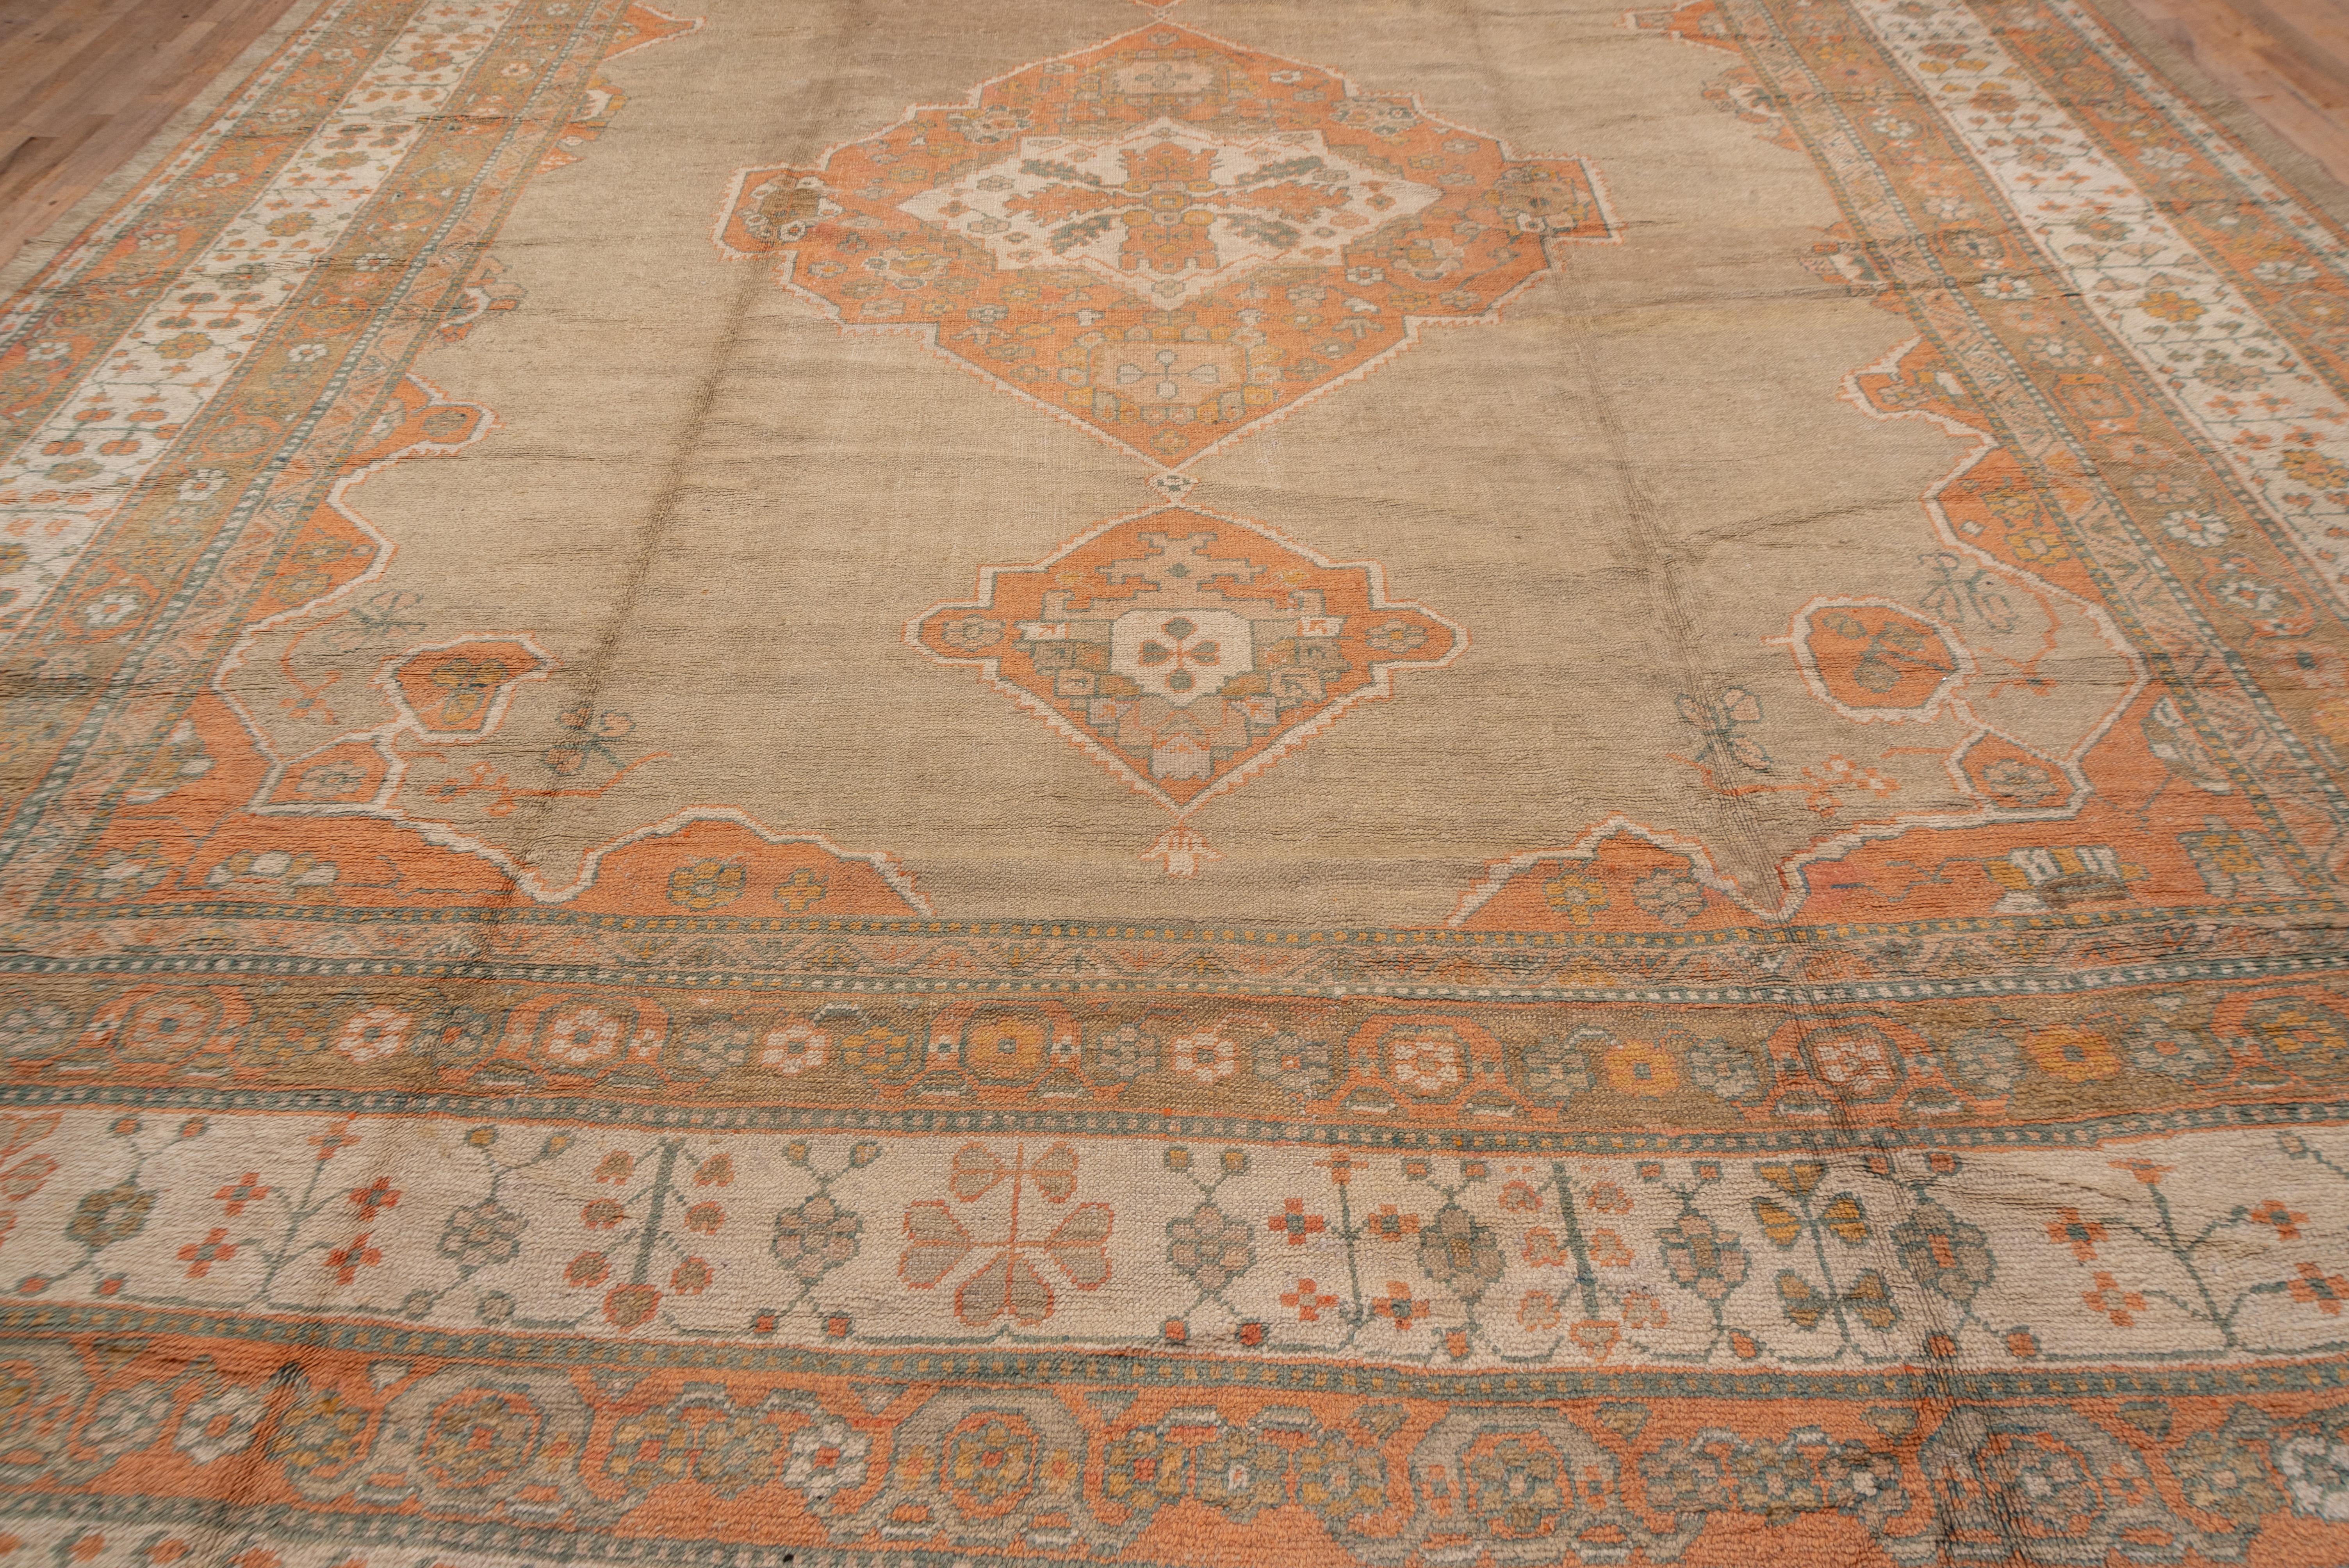 Wool 1920s Oversized Antique Turkish Oushak Carpet, Neutral Field, Orange Borders For Sale